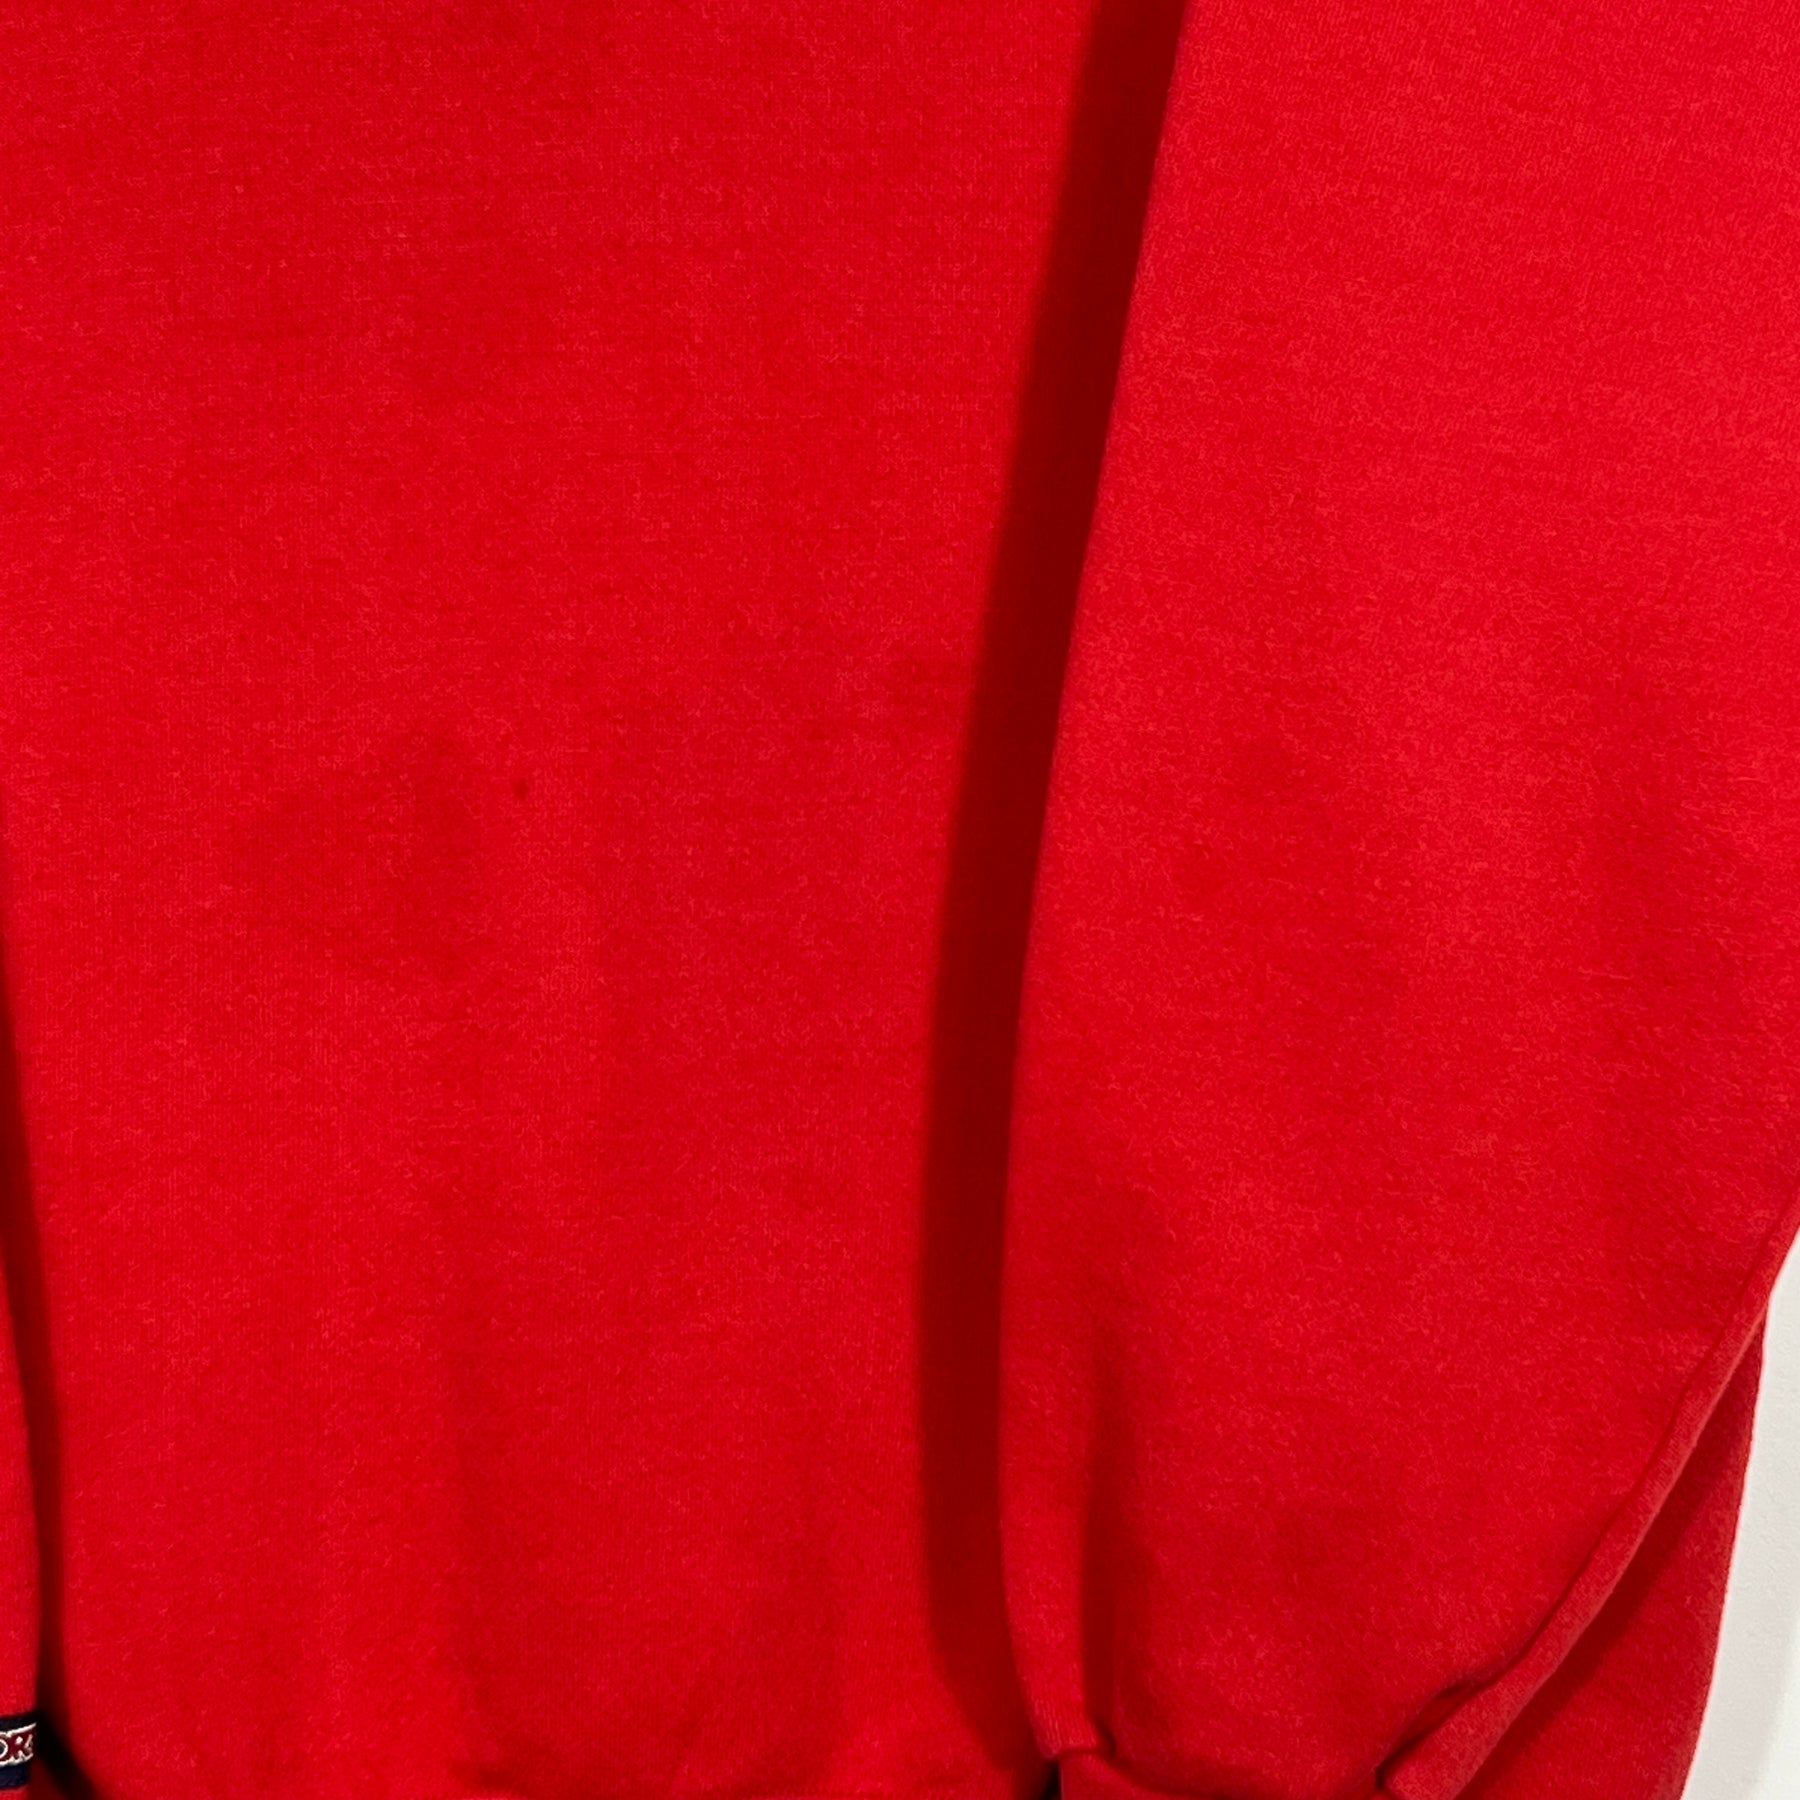 Vintage Jansport Albright College Crewneck Sweatshirt - Men's XL